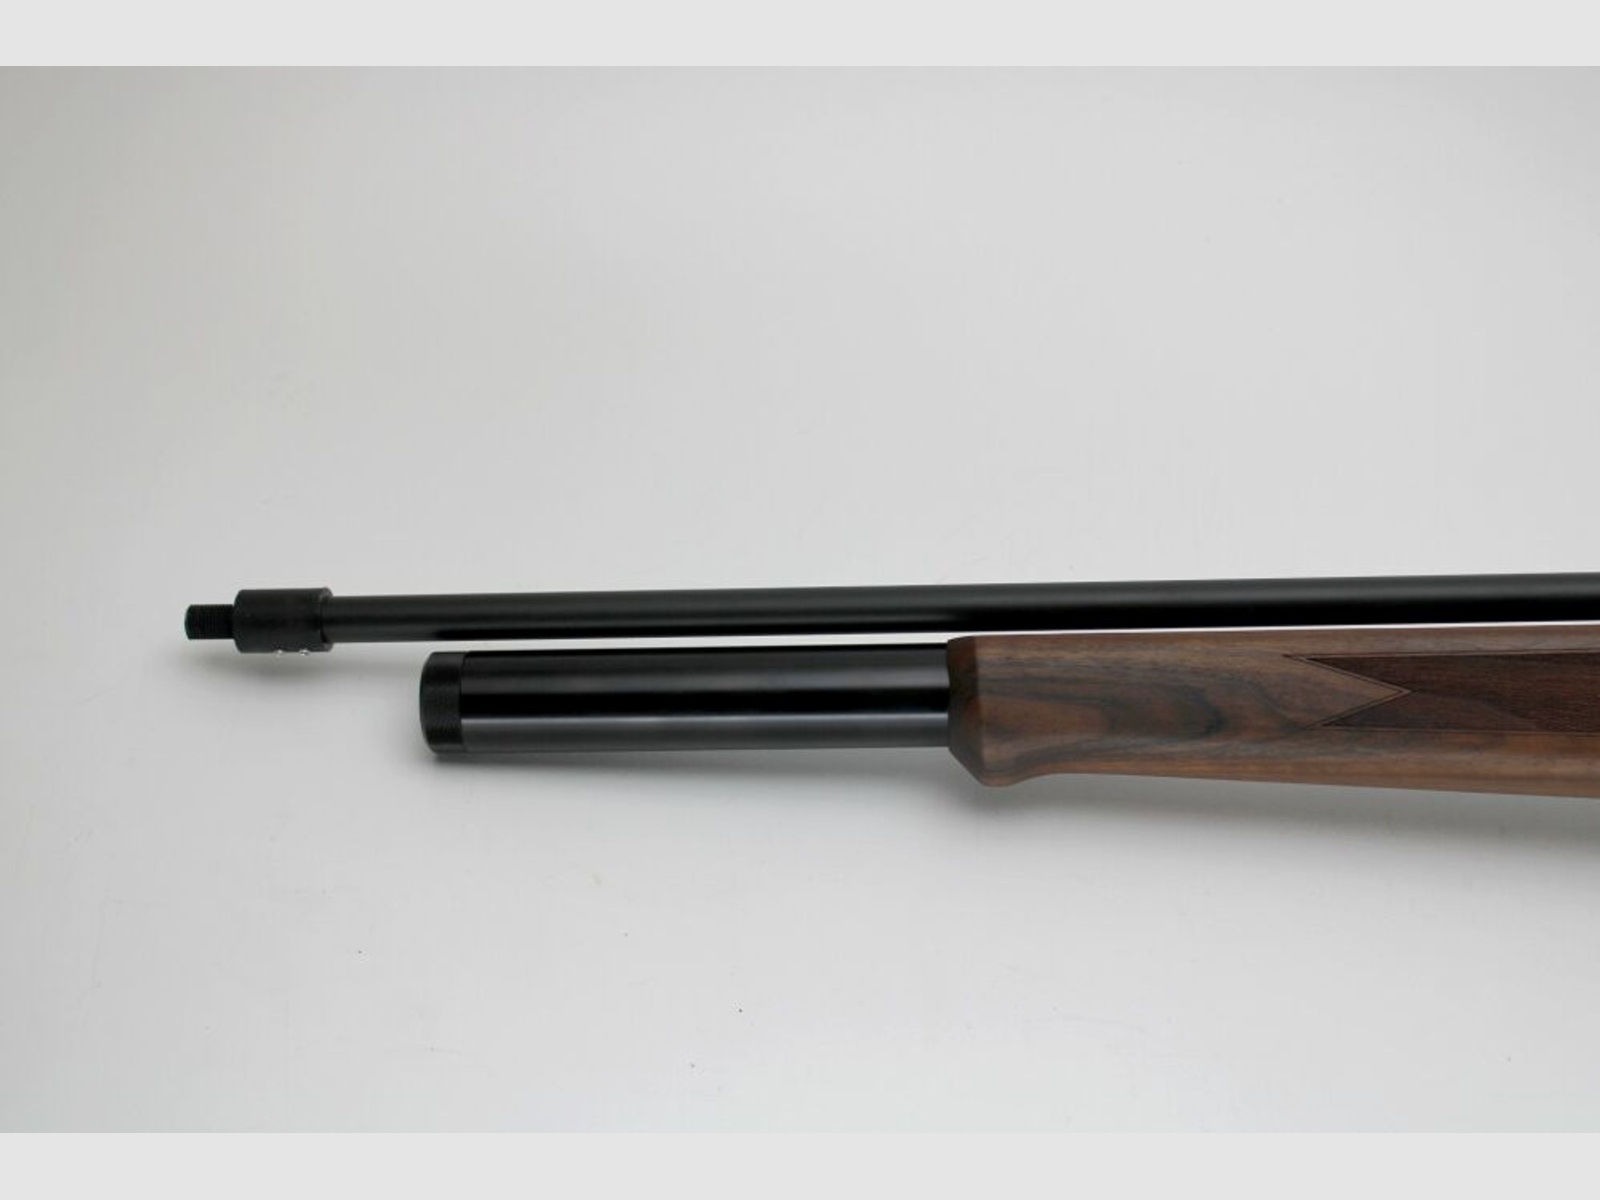 Steyr Hunting 5 mit 24 Joule	 5,5mm(Bullet)